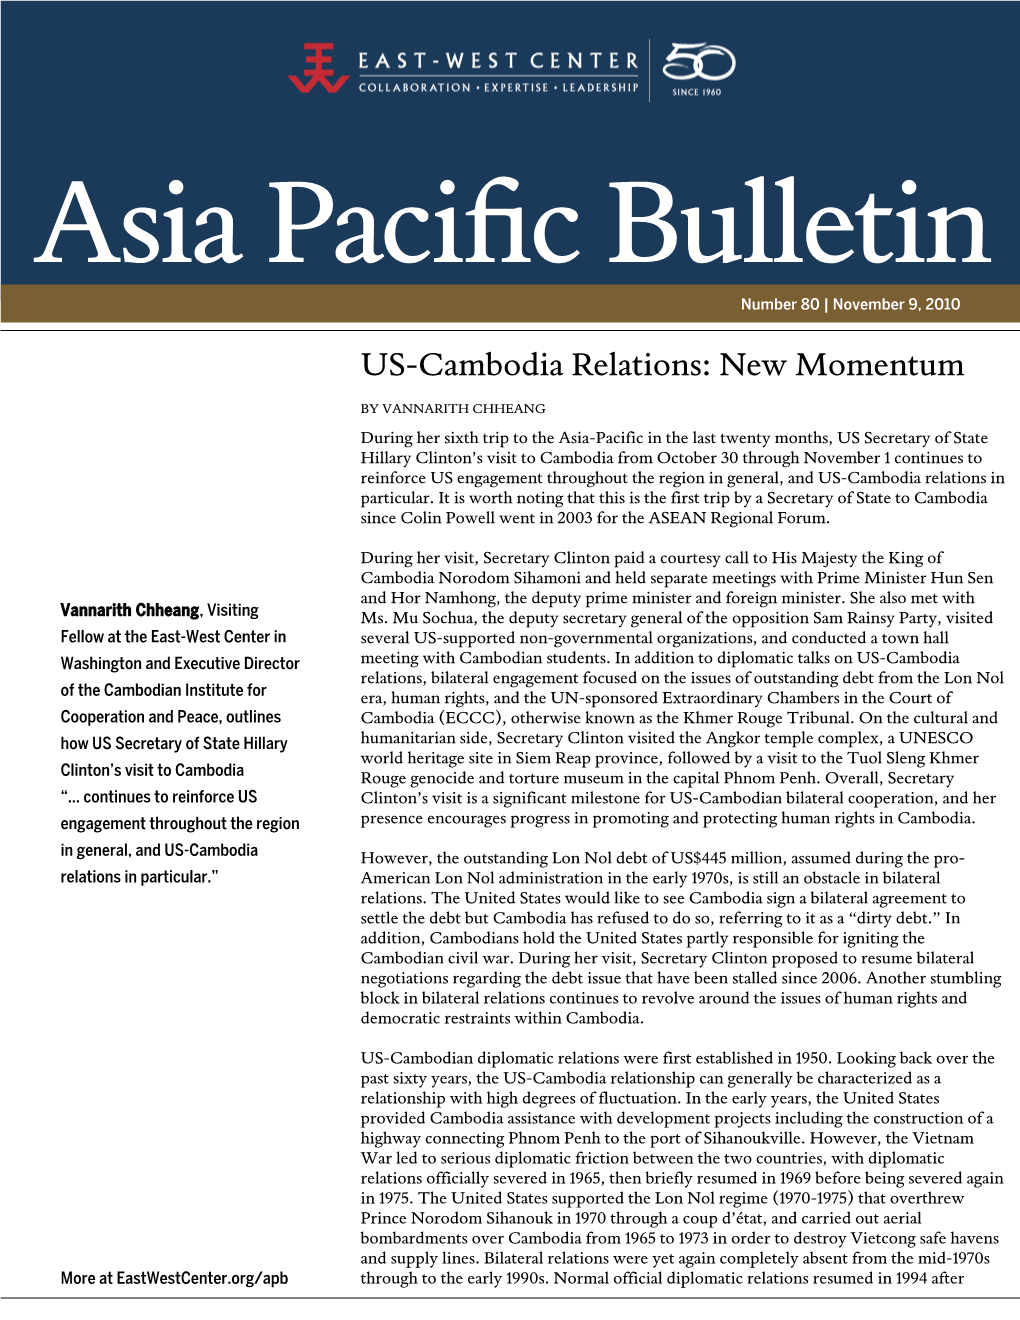 US-Cambodia Relations: New Momentum